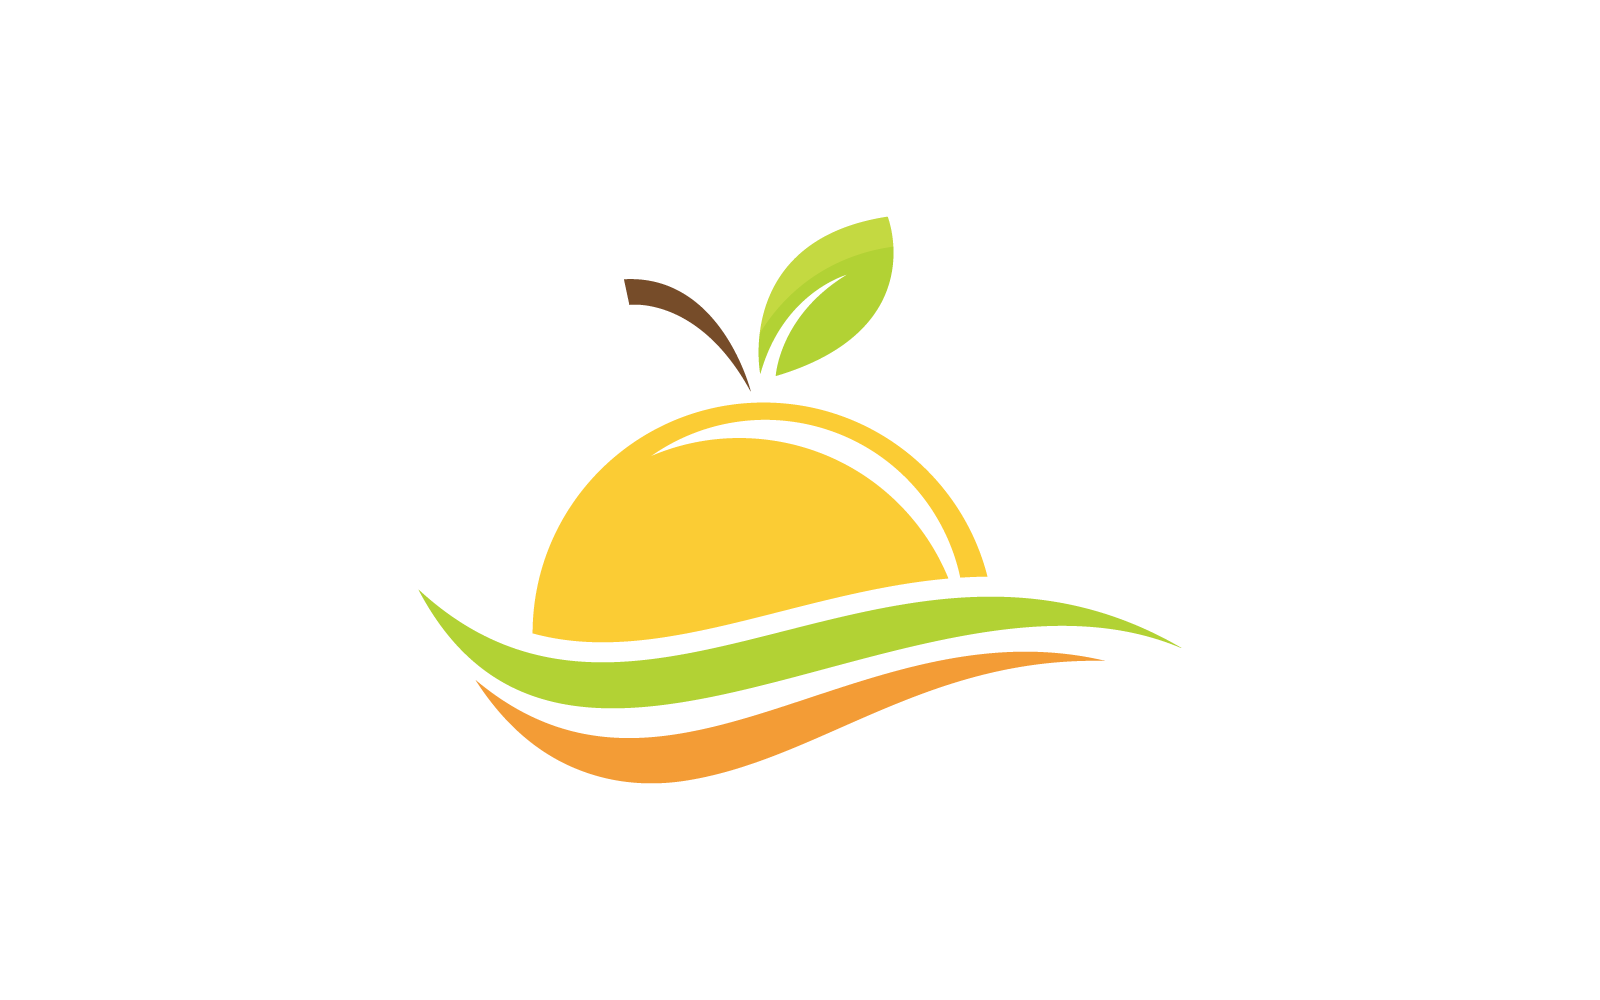 Orange fruit design logo Vector illustration template